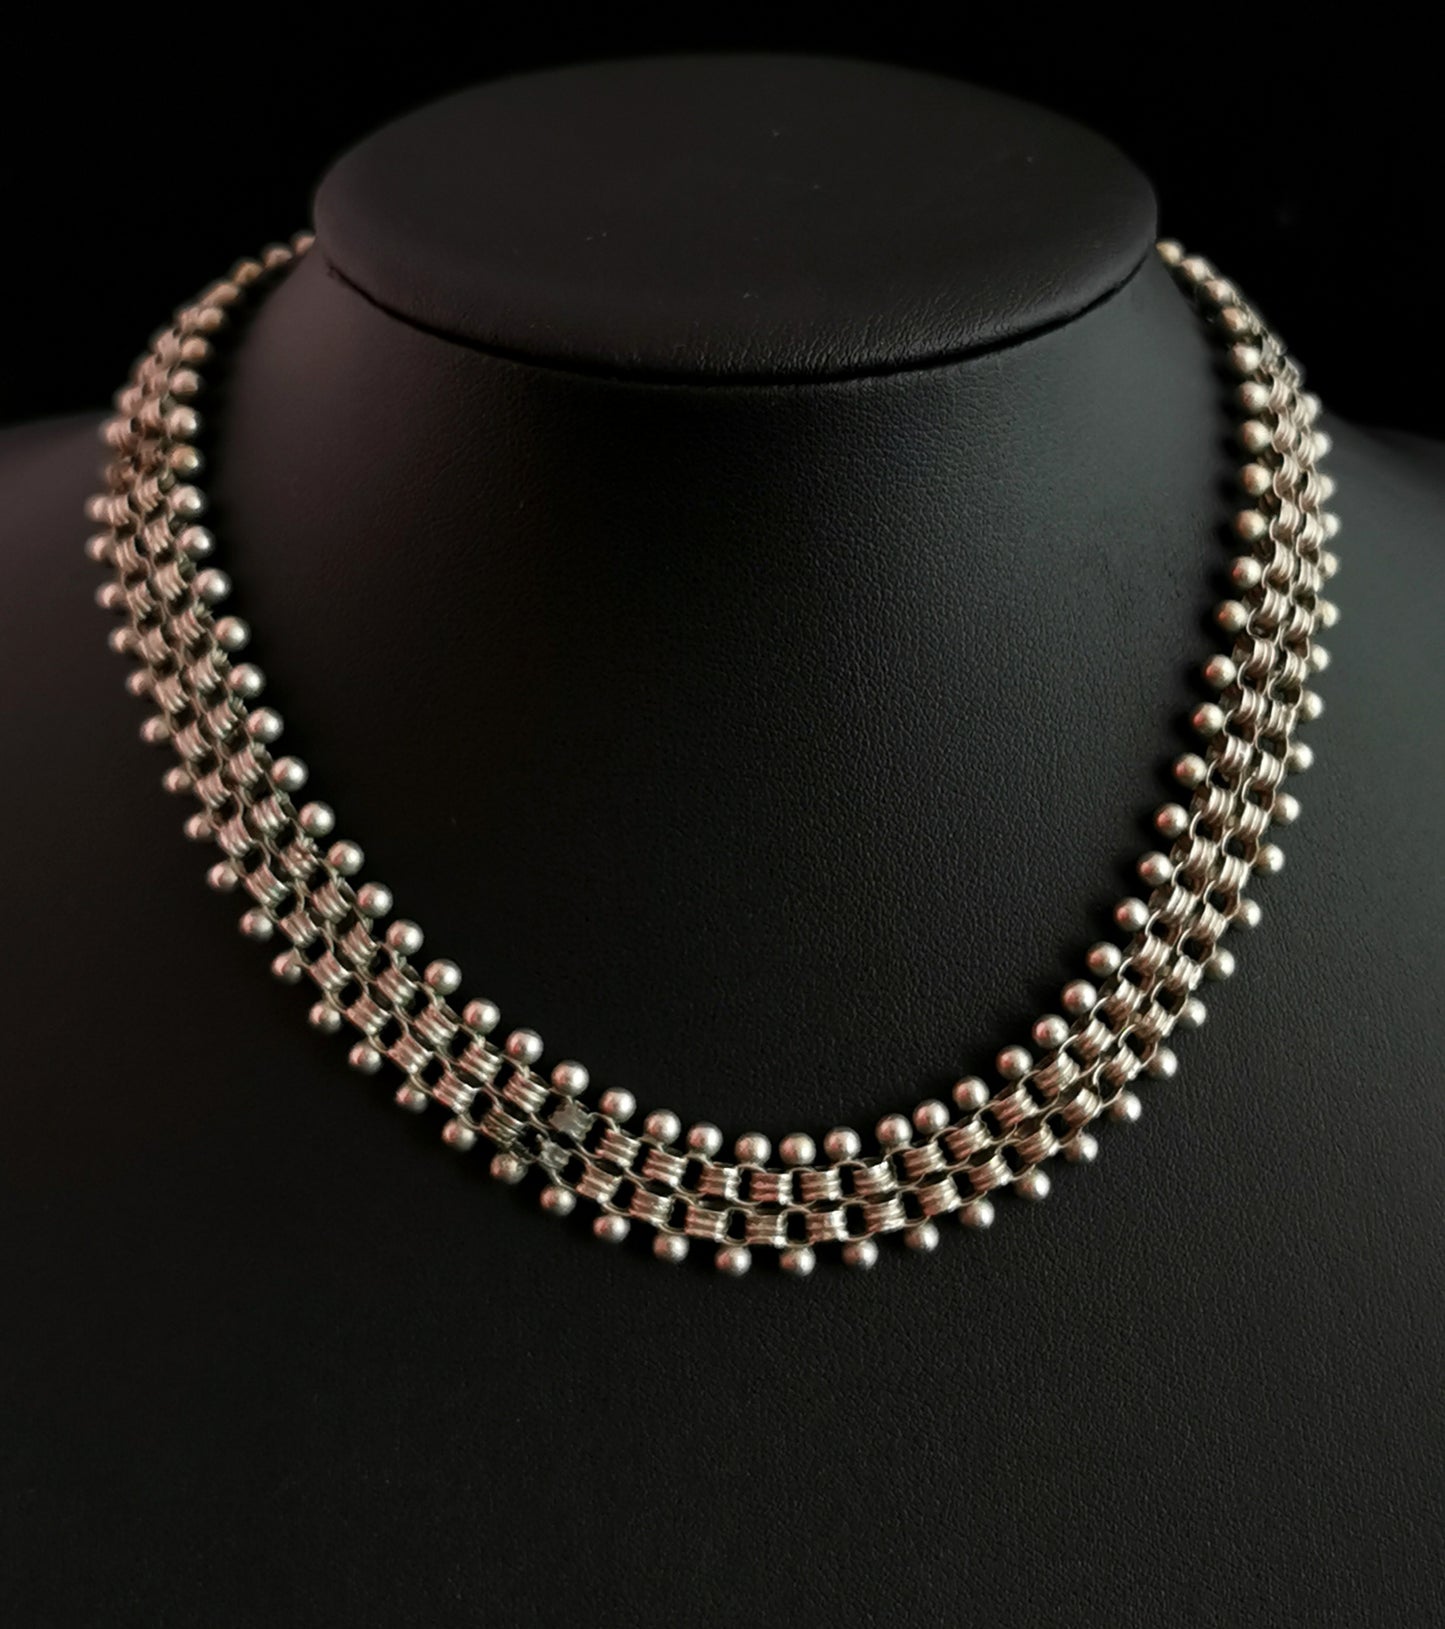 Antique Victorian silver collar necklace, pierced links